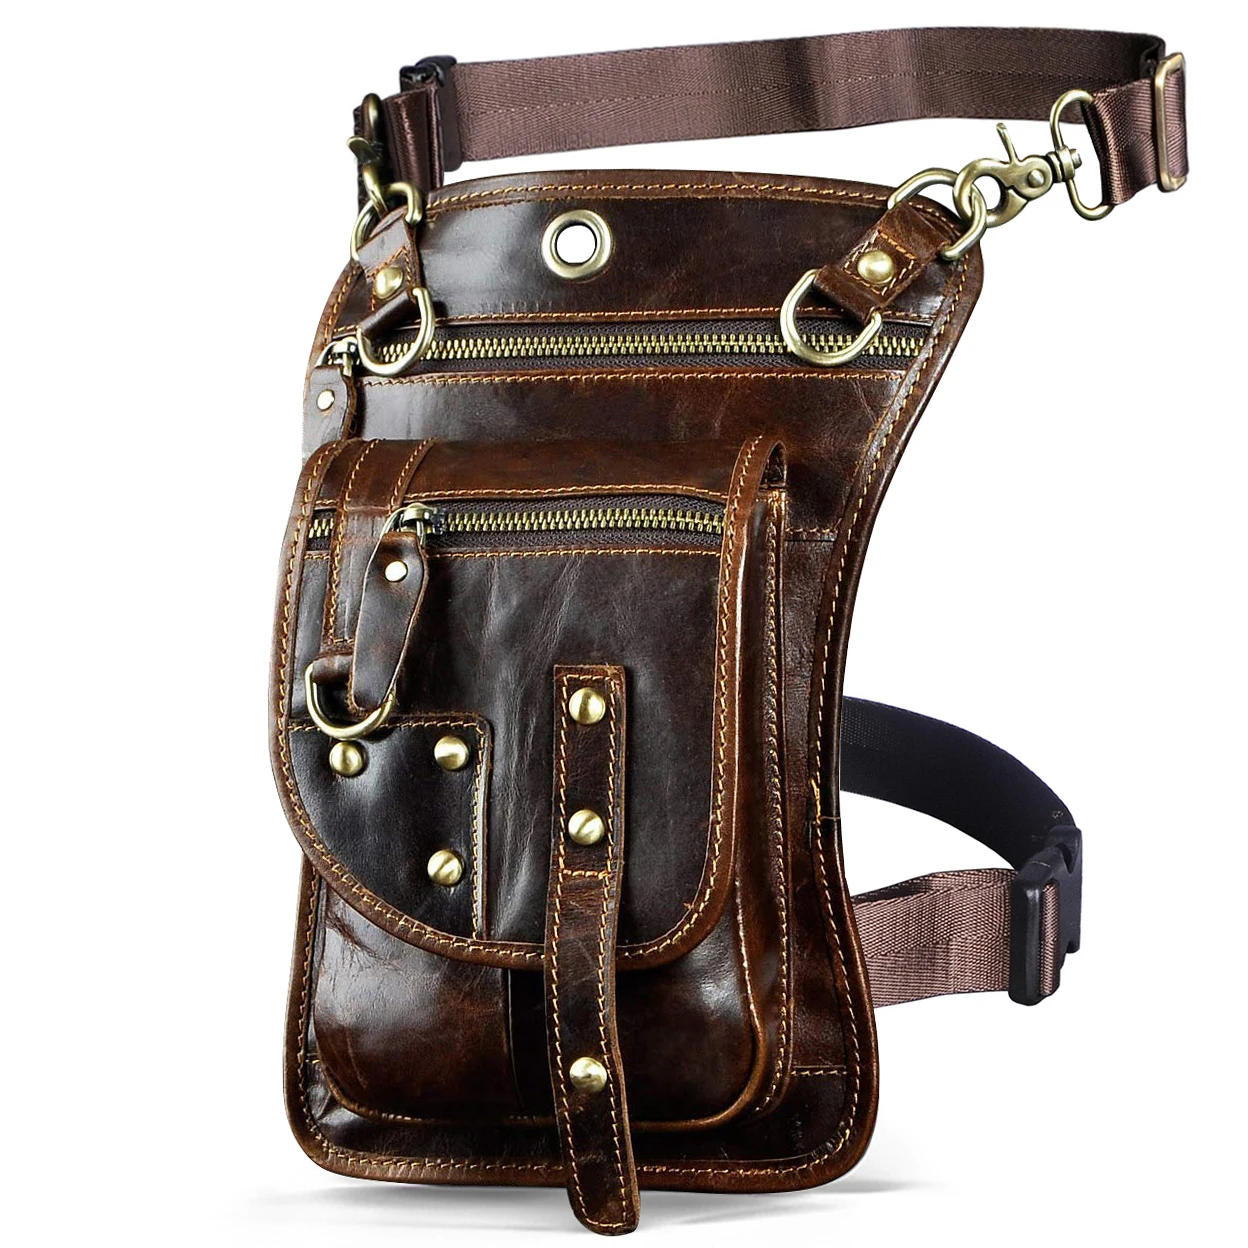 crazy horse leather design men small messenger mochila bag fashion travel belt fanny waist pack drop leg bag tablet pouch 2141 free global shipping